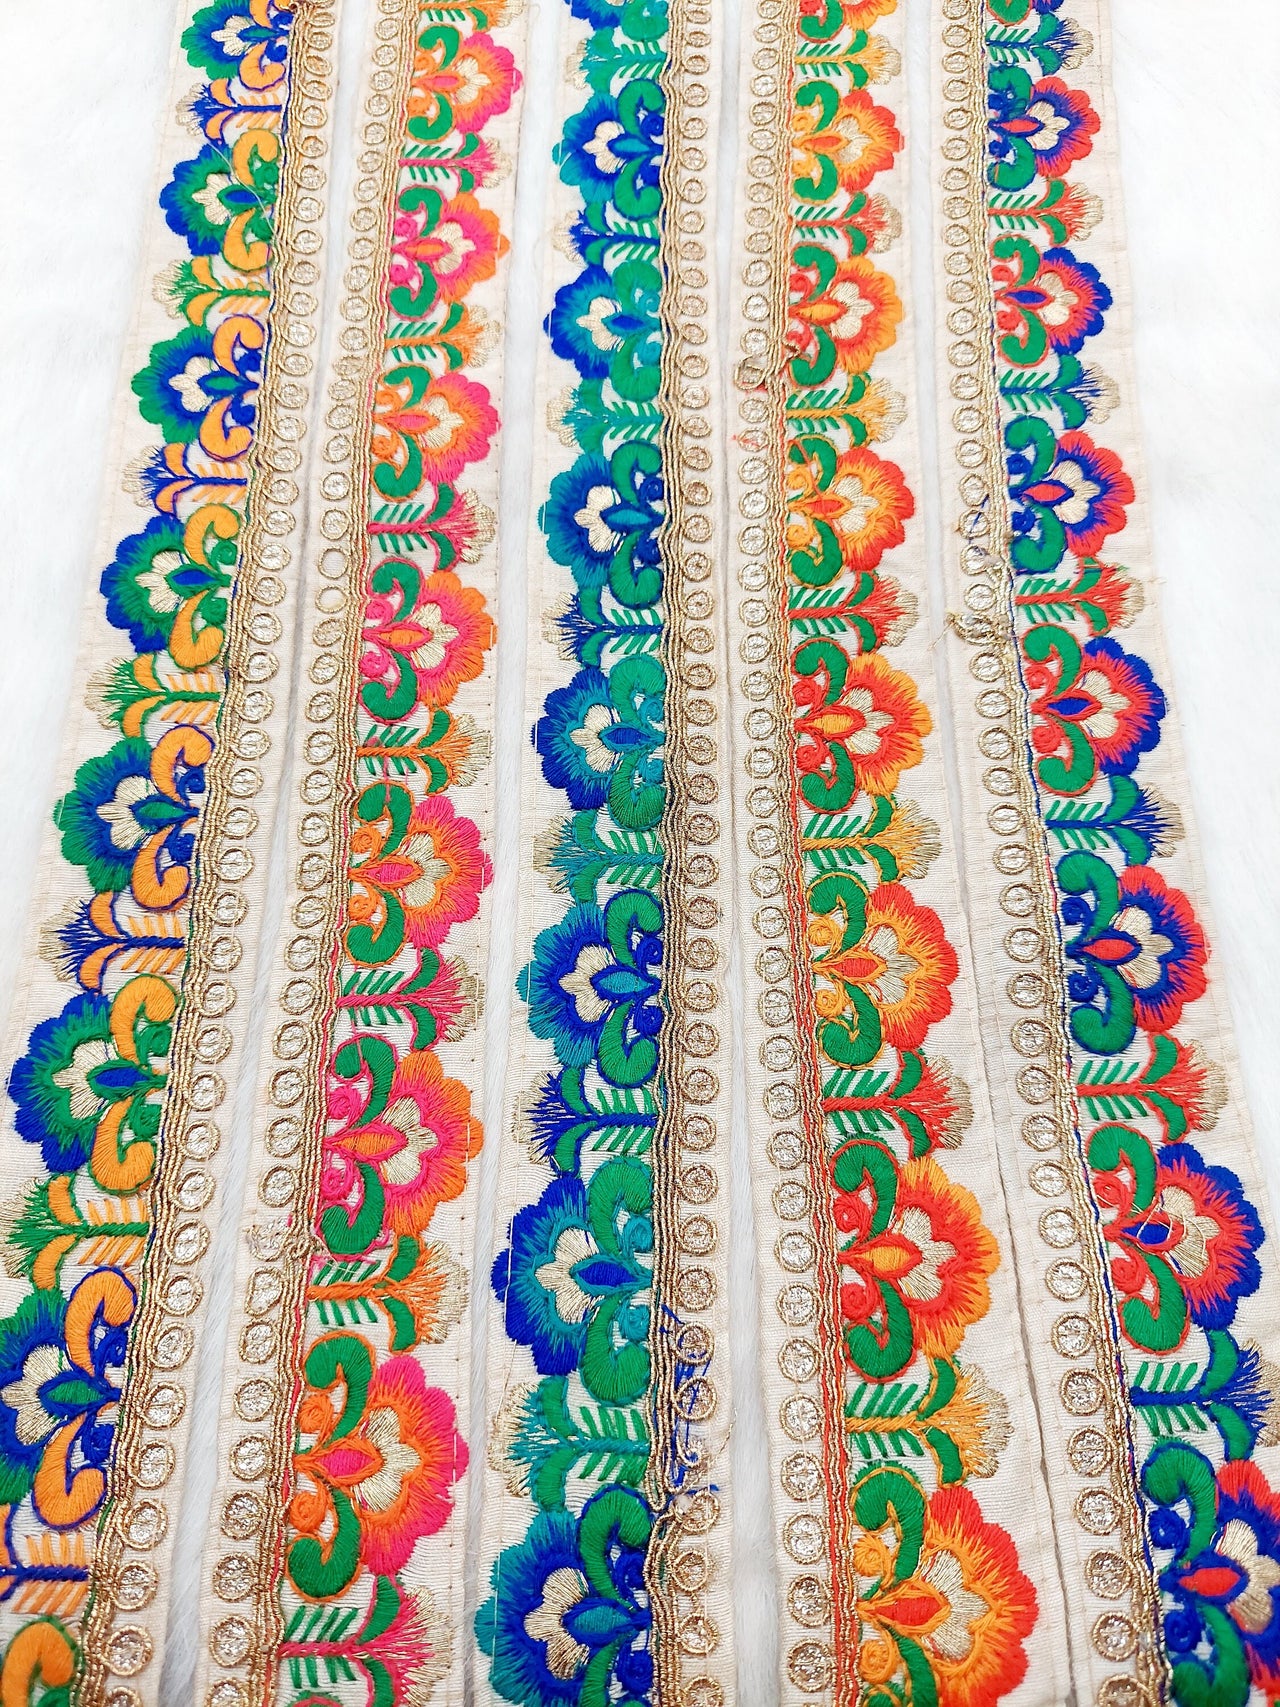 Beige Art Silk Lace Trim in Floral Embroidery, Gold Sequins Embellishments, Decorative Trim